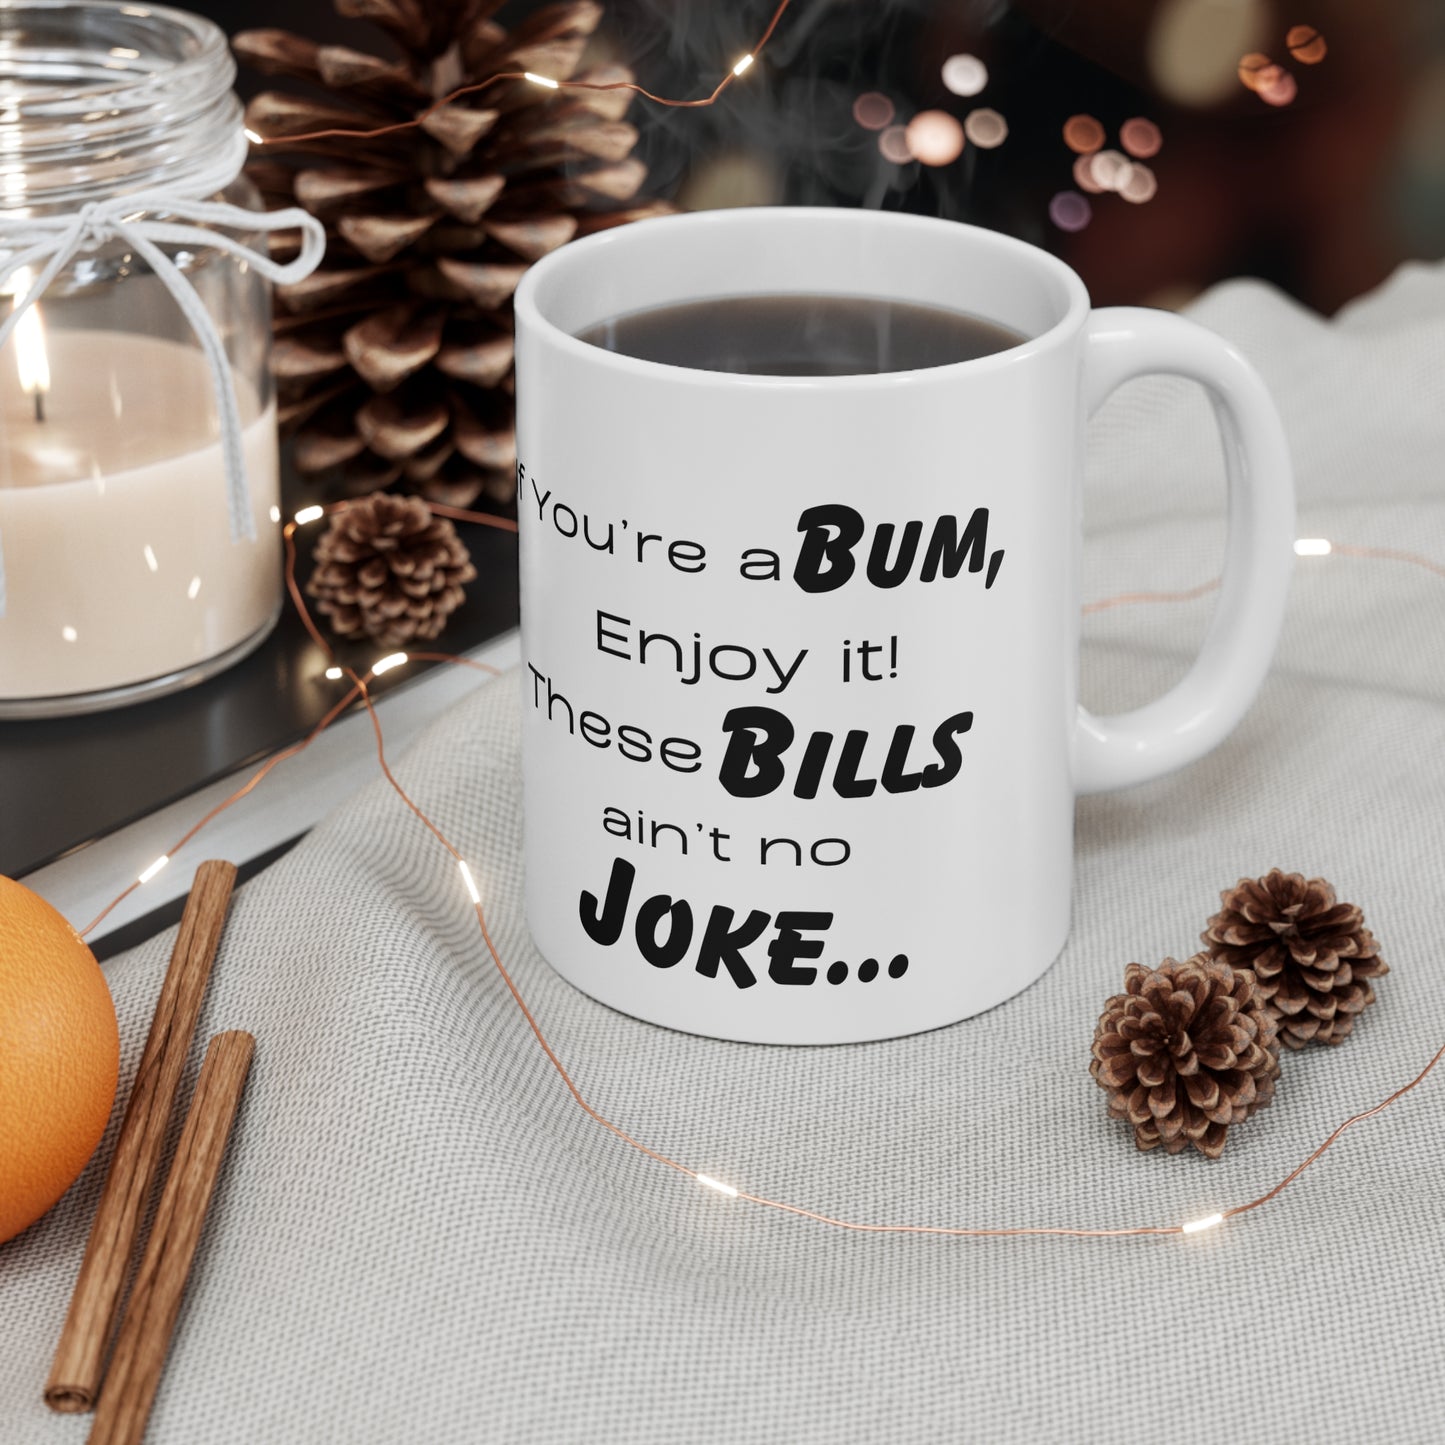 If you're a bum, enjoy it. These bills aint no Joke! Ceramic Mug 11oz